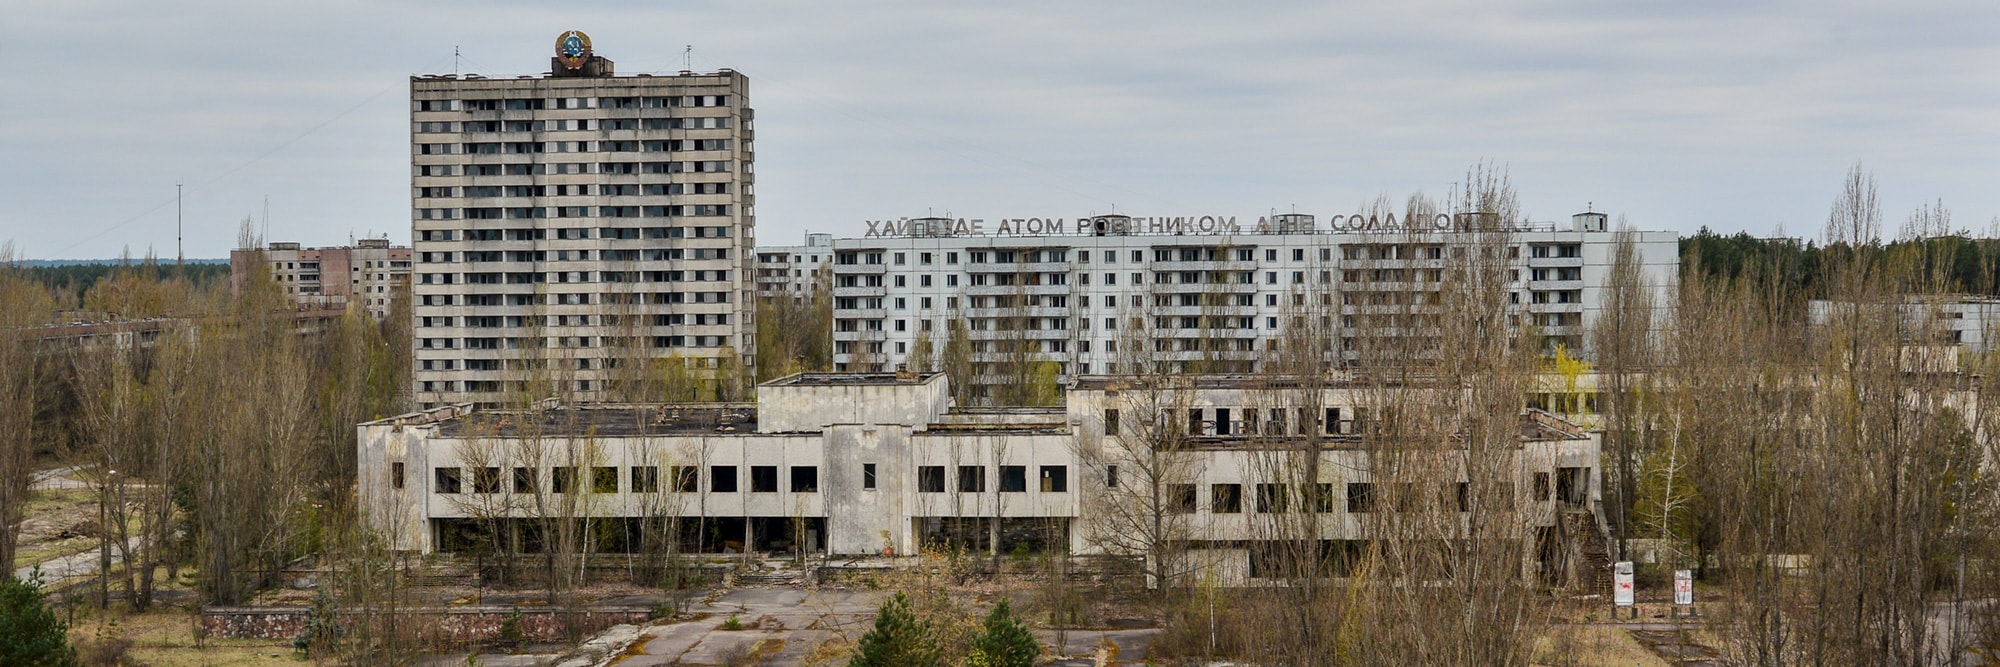 www.chernobyl.one